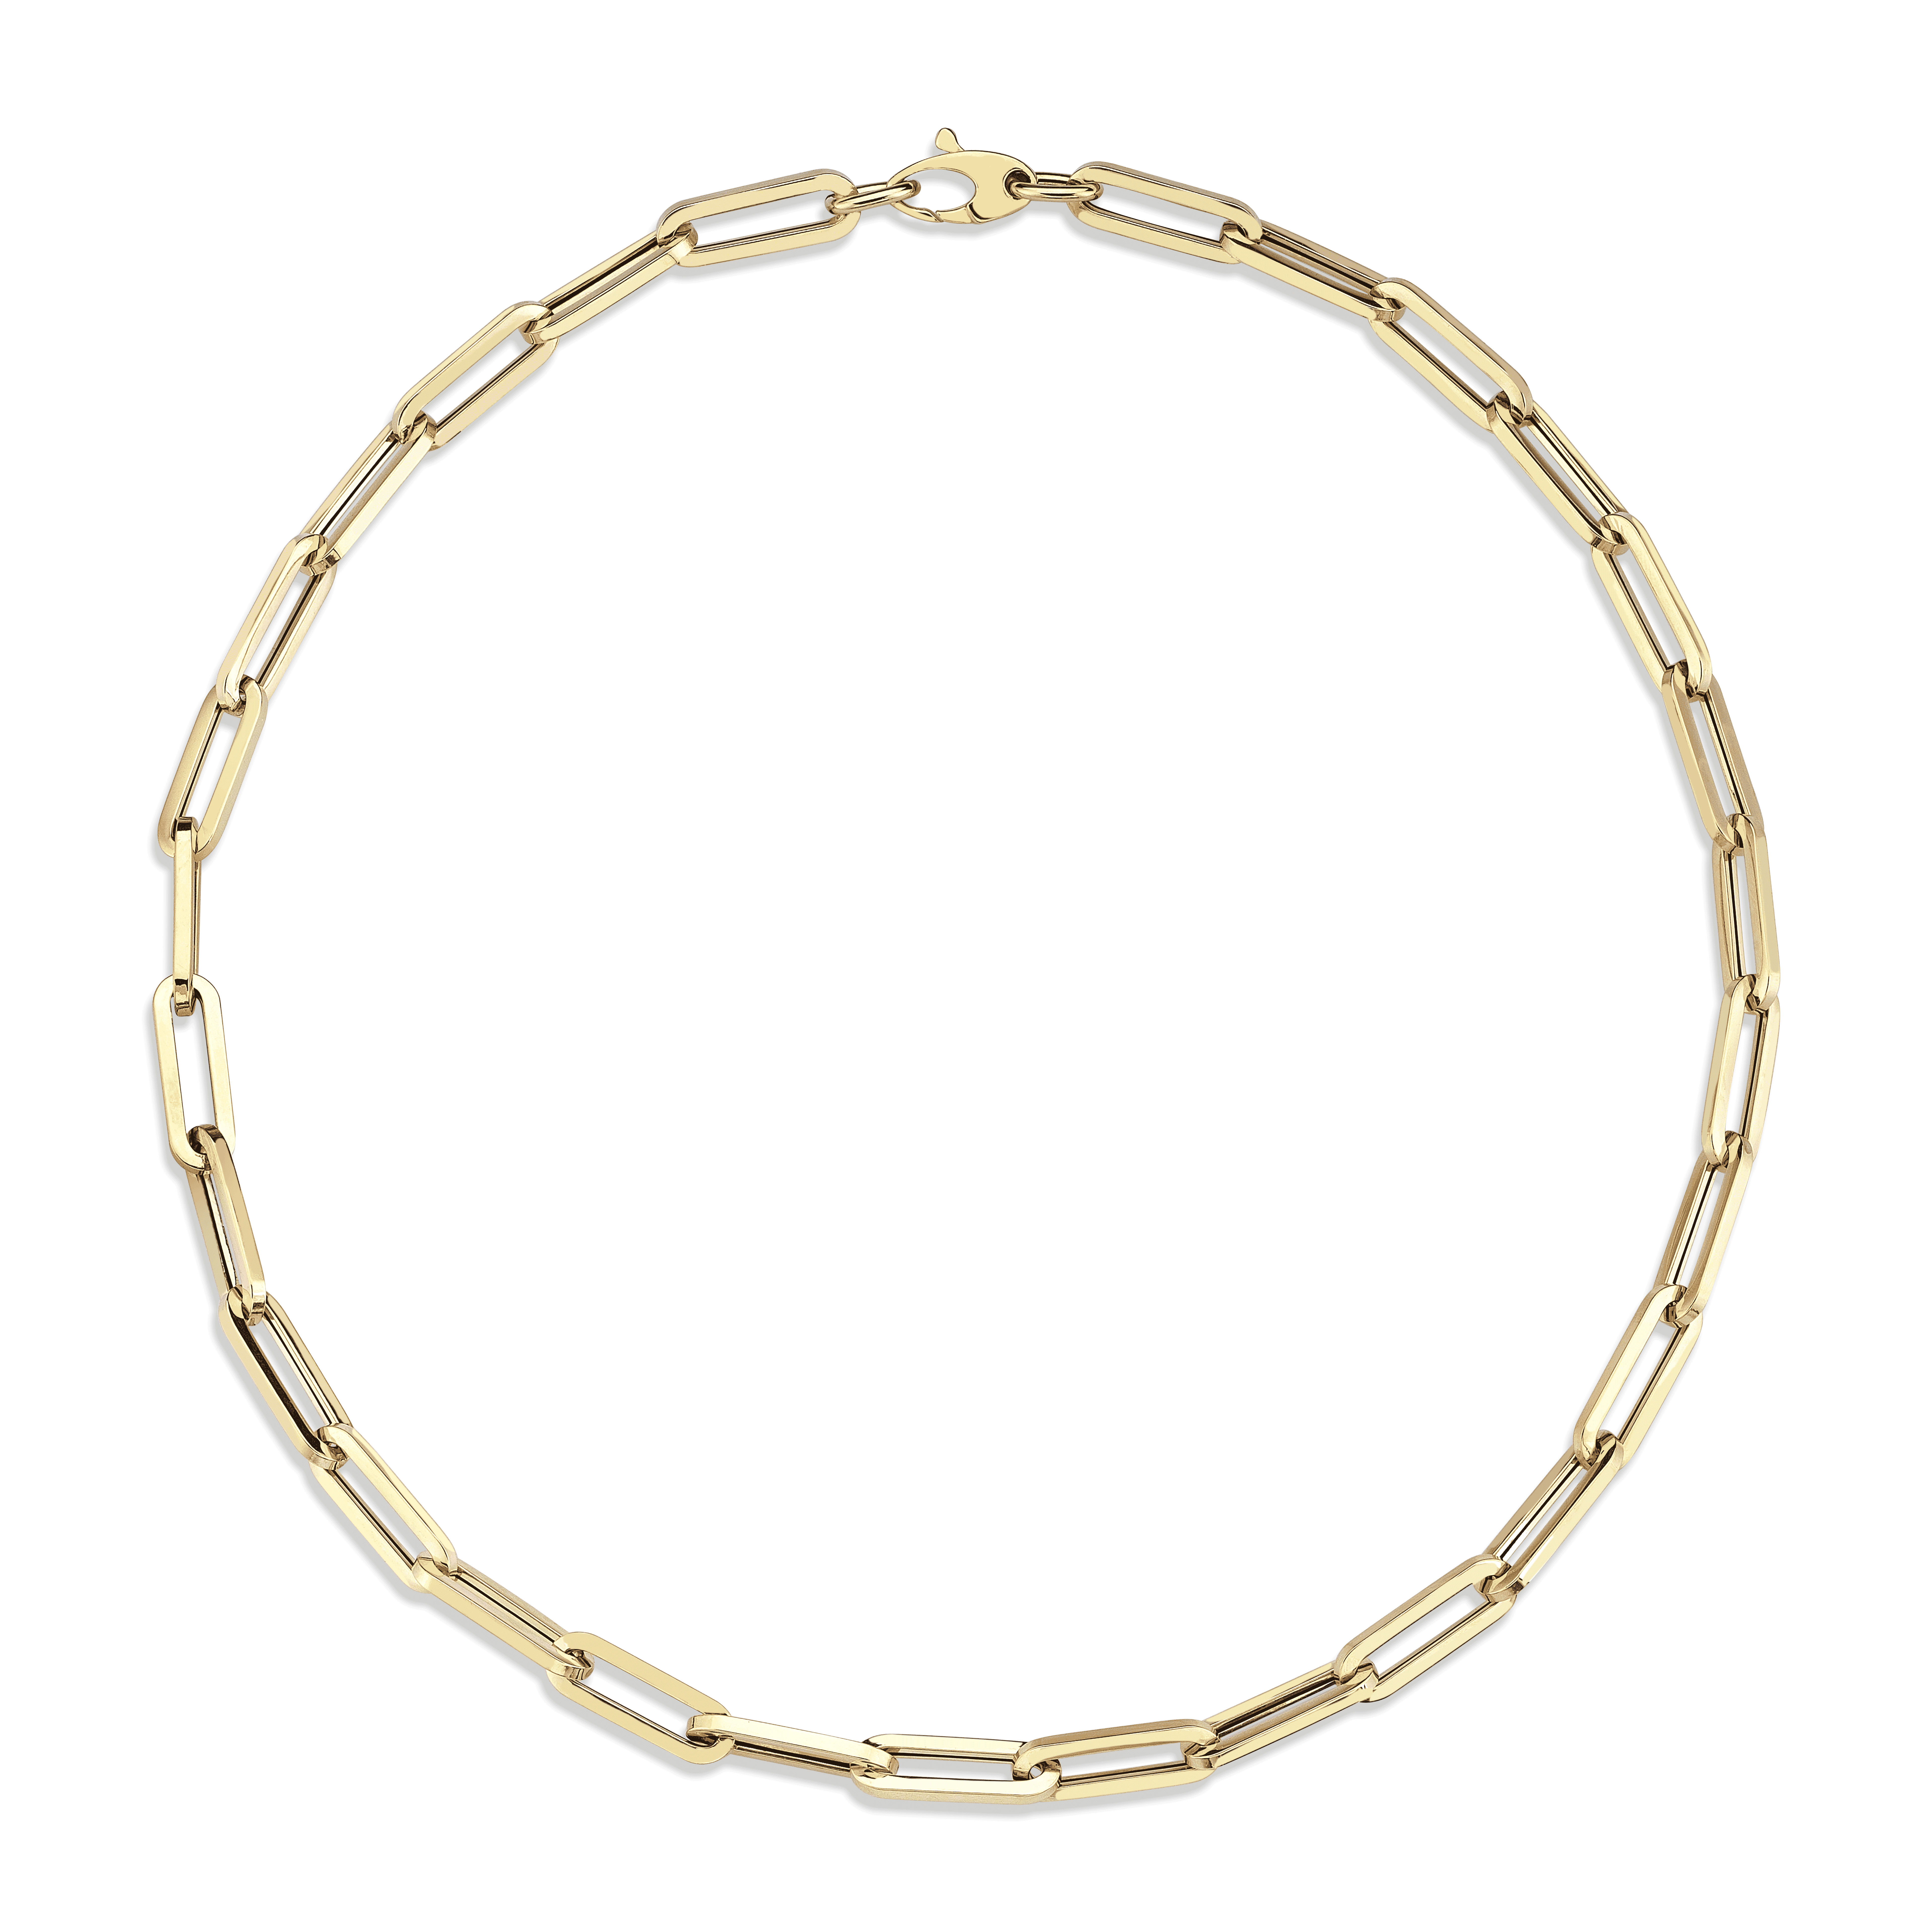 Jumbo Links Chain Necklace - 1